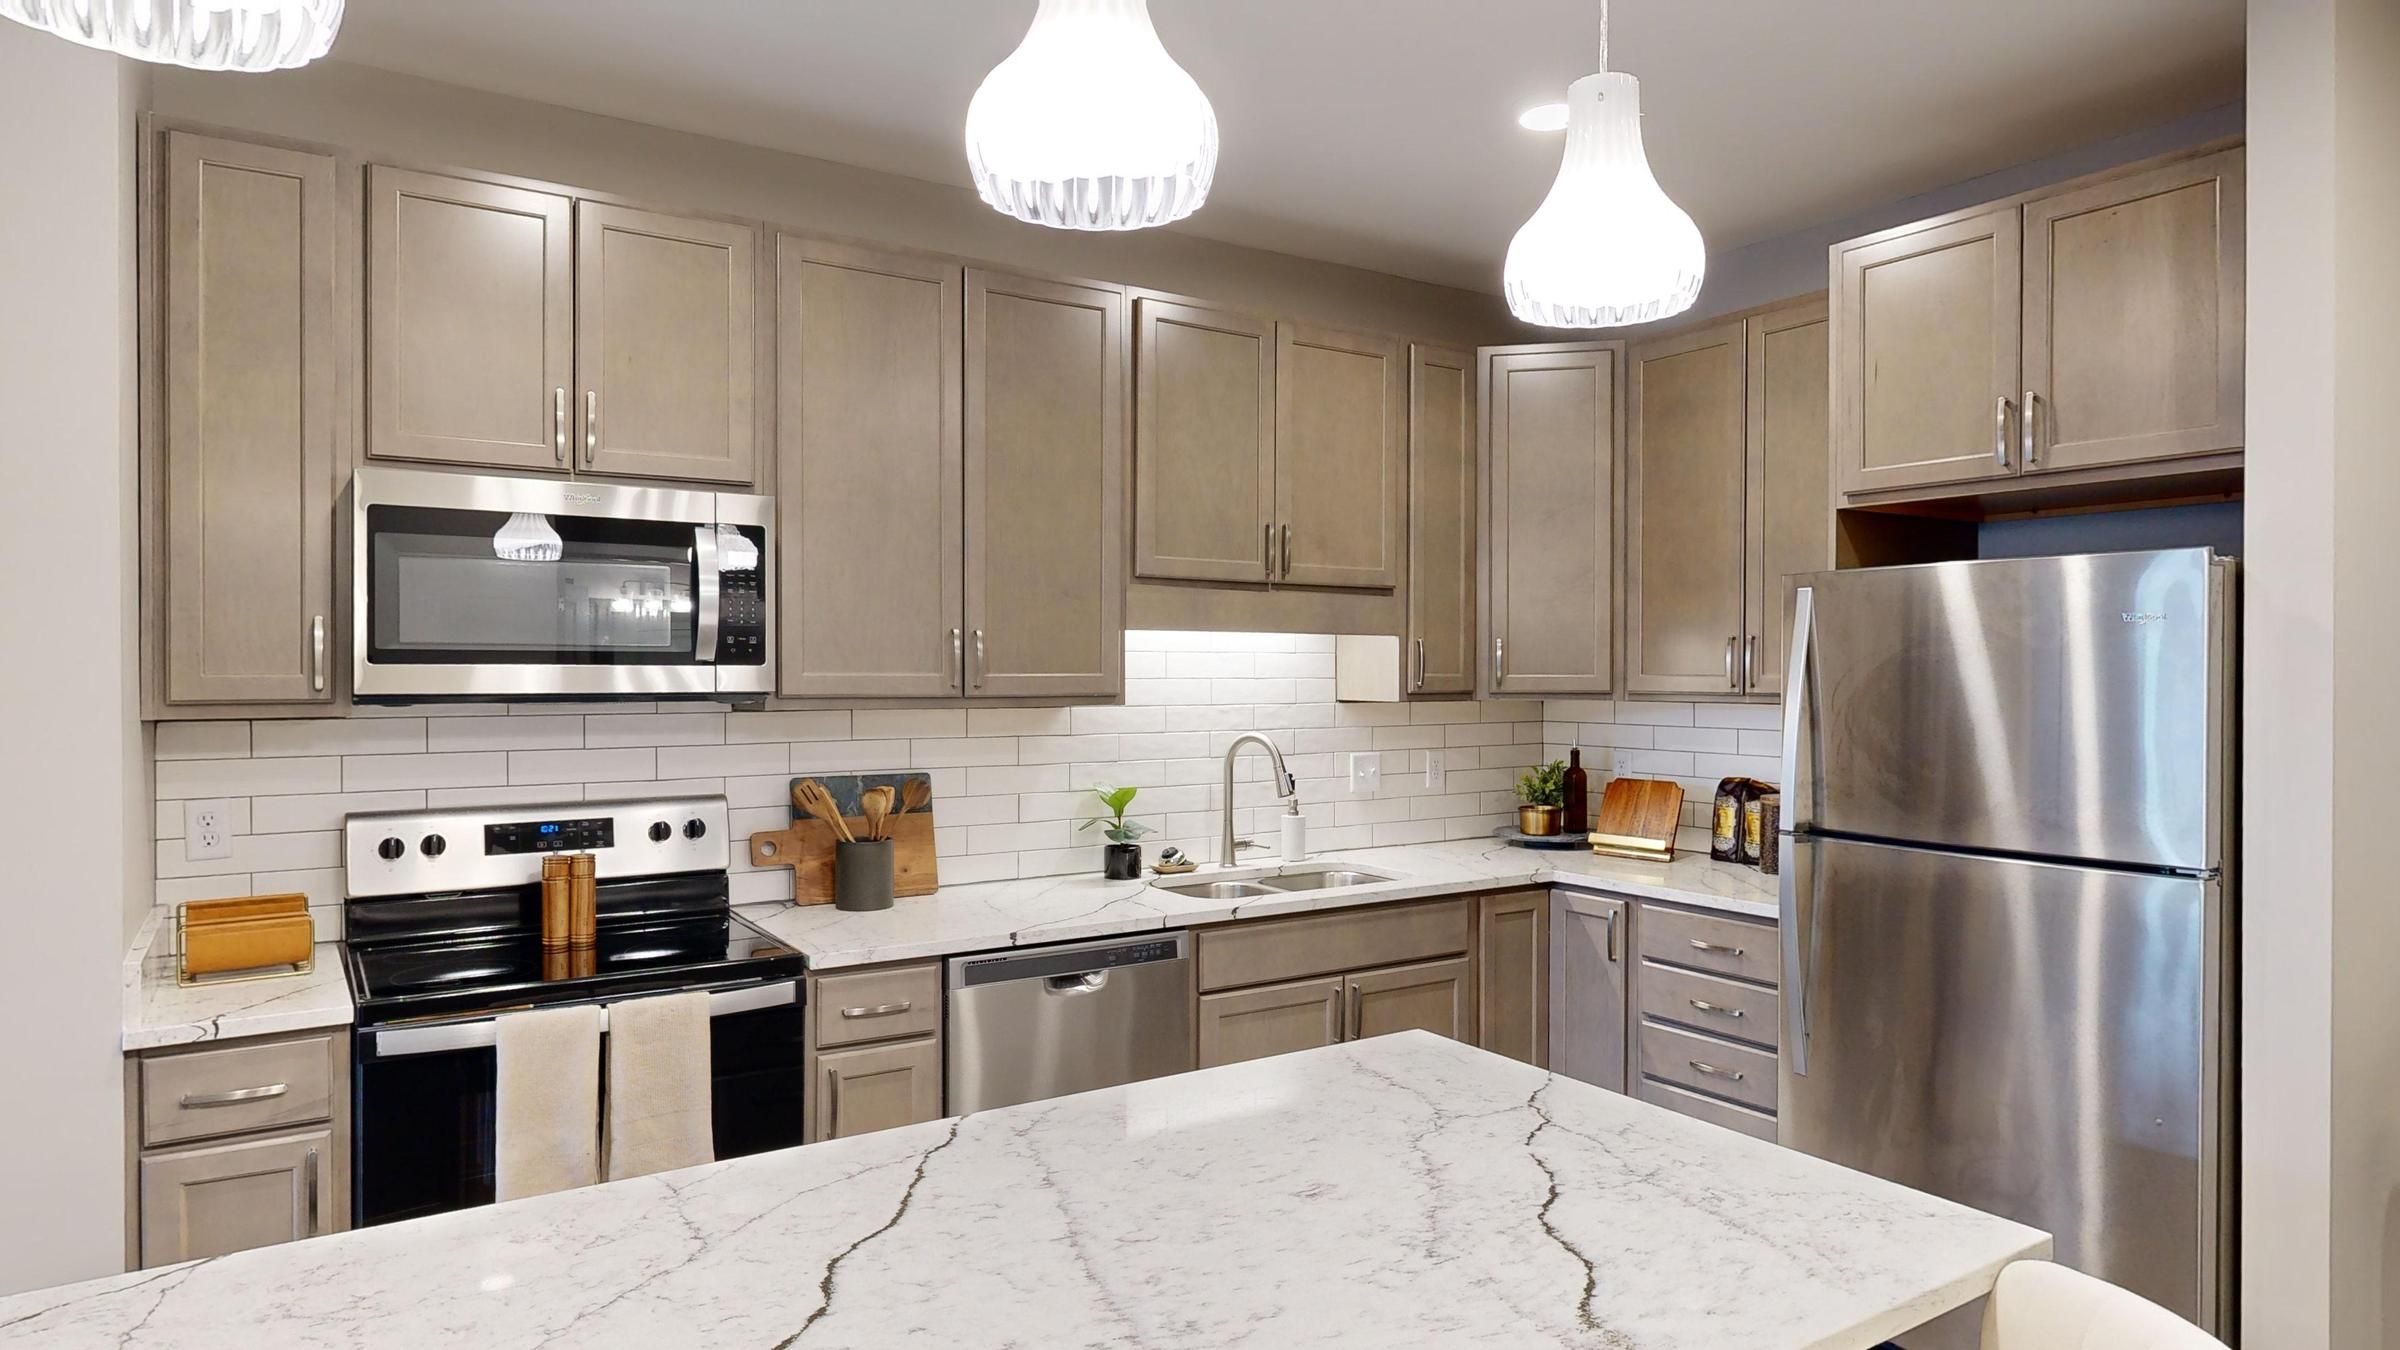 Slate property's sleek kitchen showcasing taupe cabinetry, white subway tile backsplash, and marble countertops.